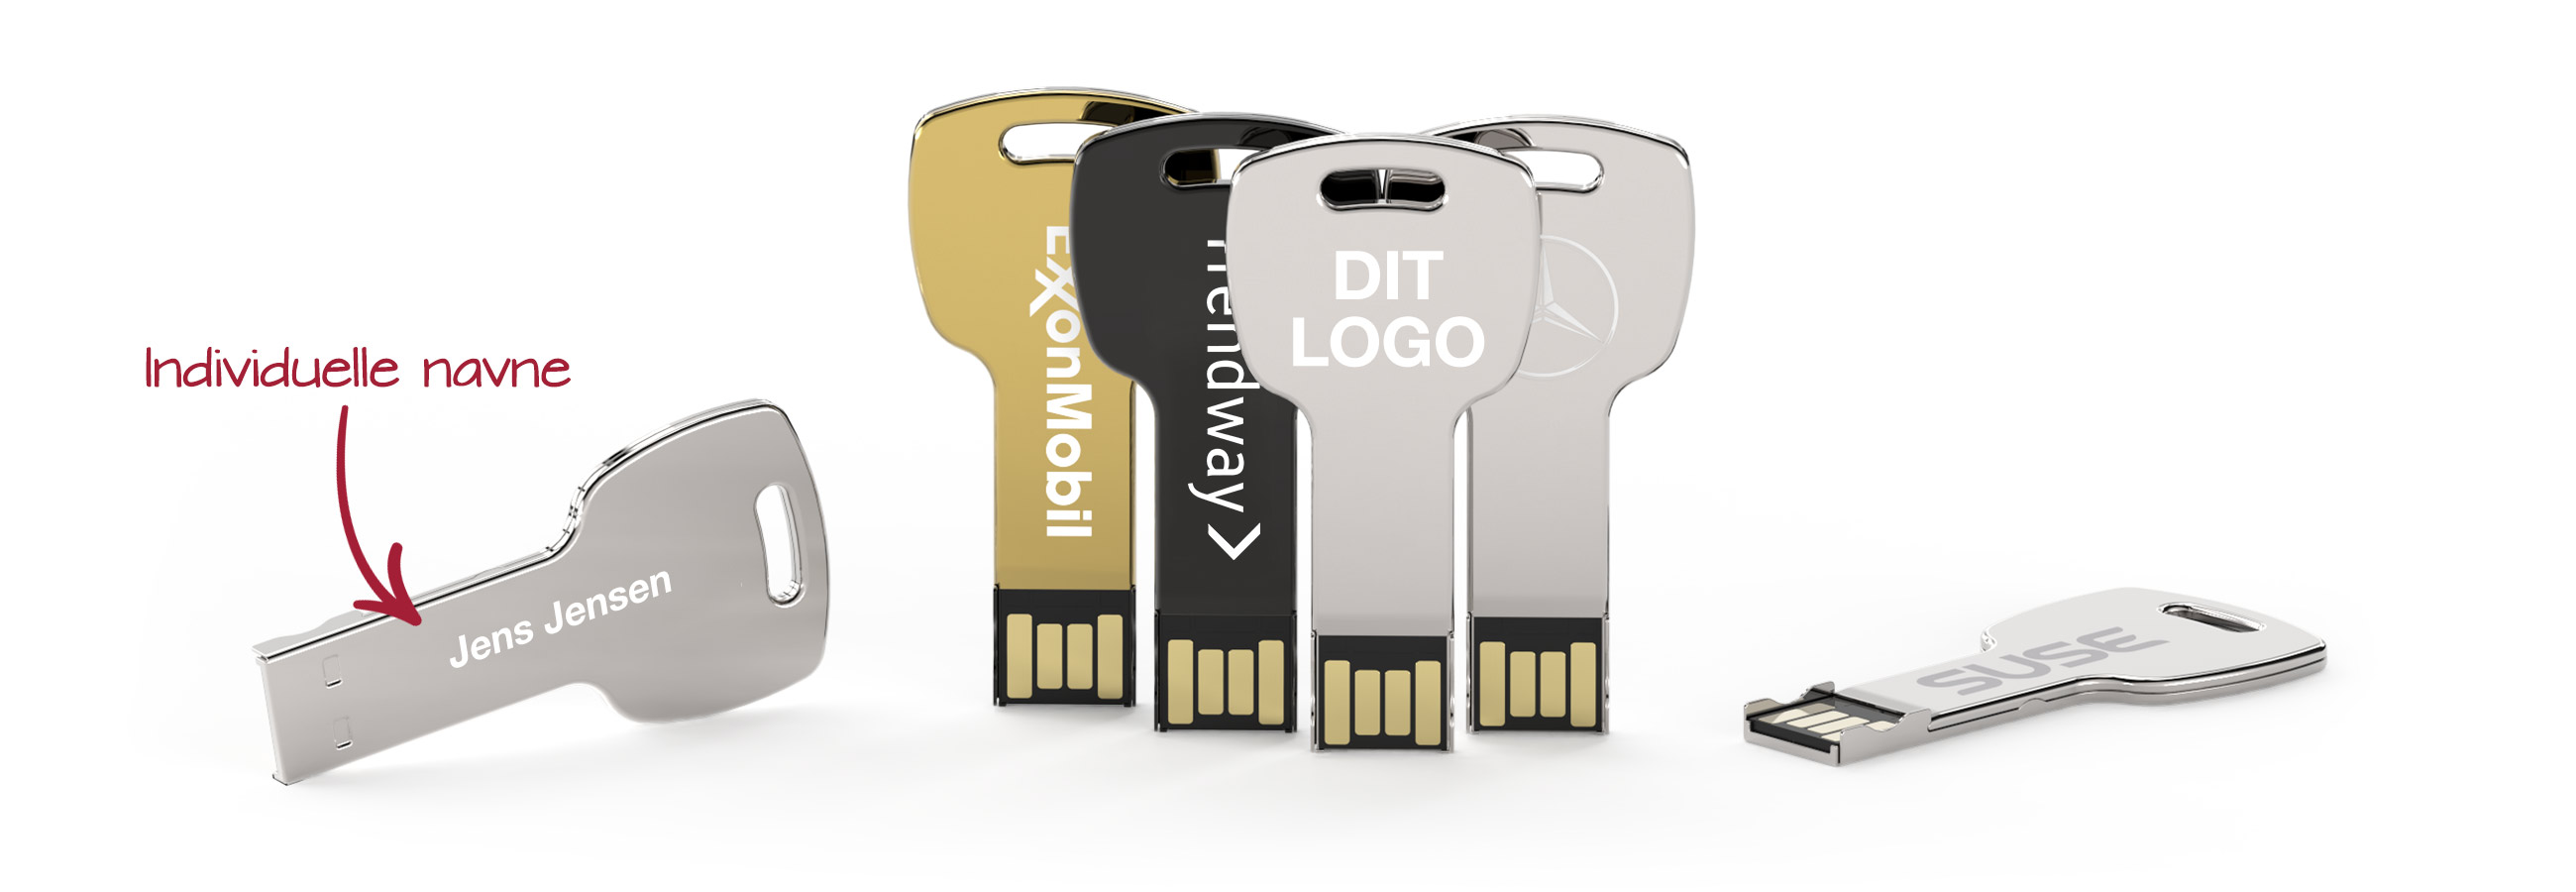 Key USB stik